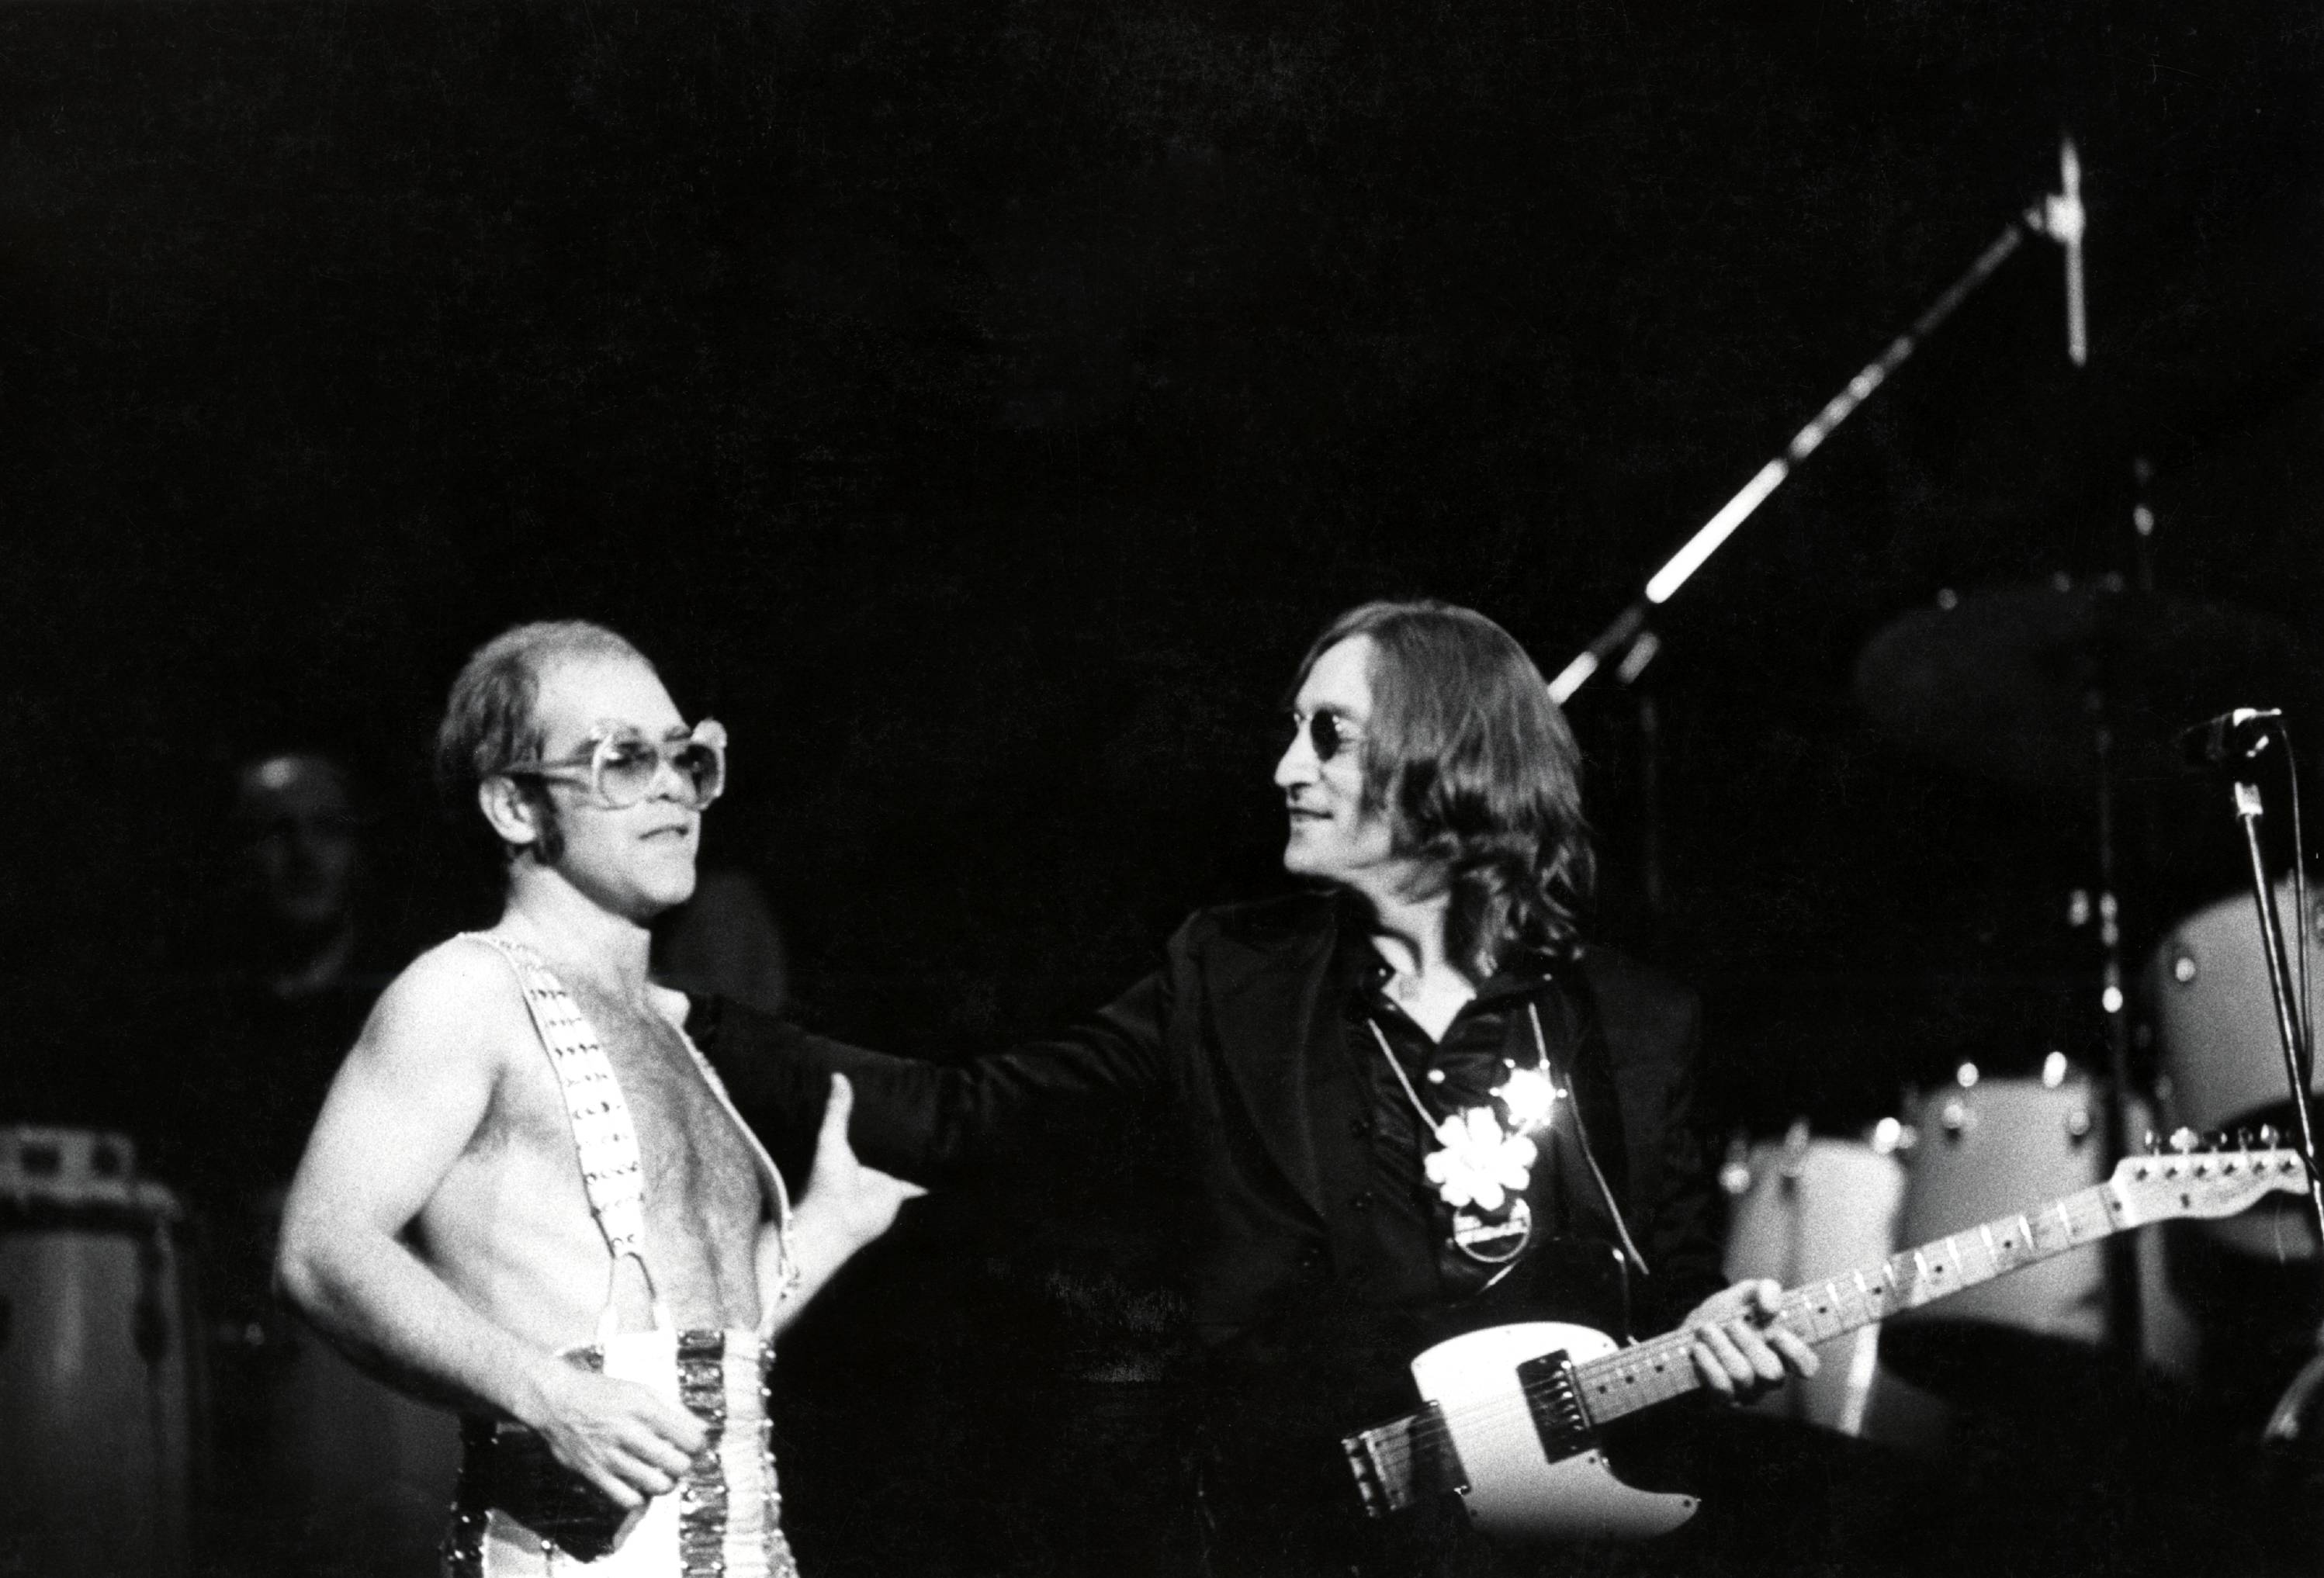 John Lennon makes a surprise appearance at Elton John's 1974 Madison Square Garden concert